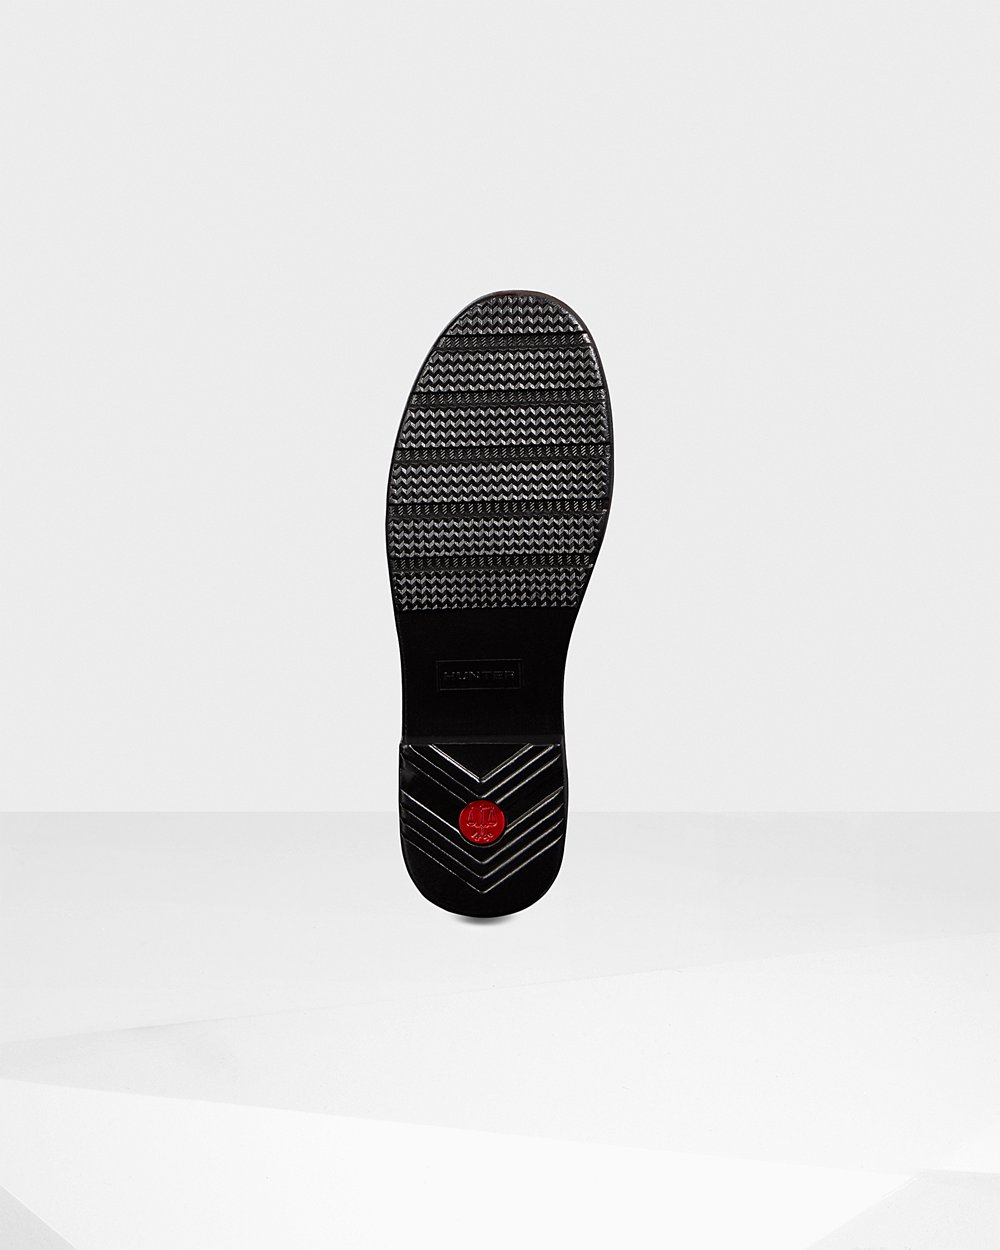 Womens Tall Rain Boots - Hunter Refined Adjustable Gloss (67WRKPAUI) - Black